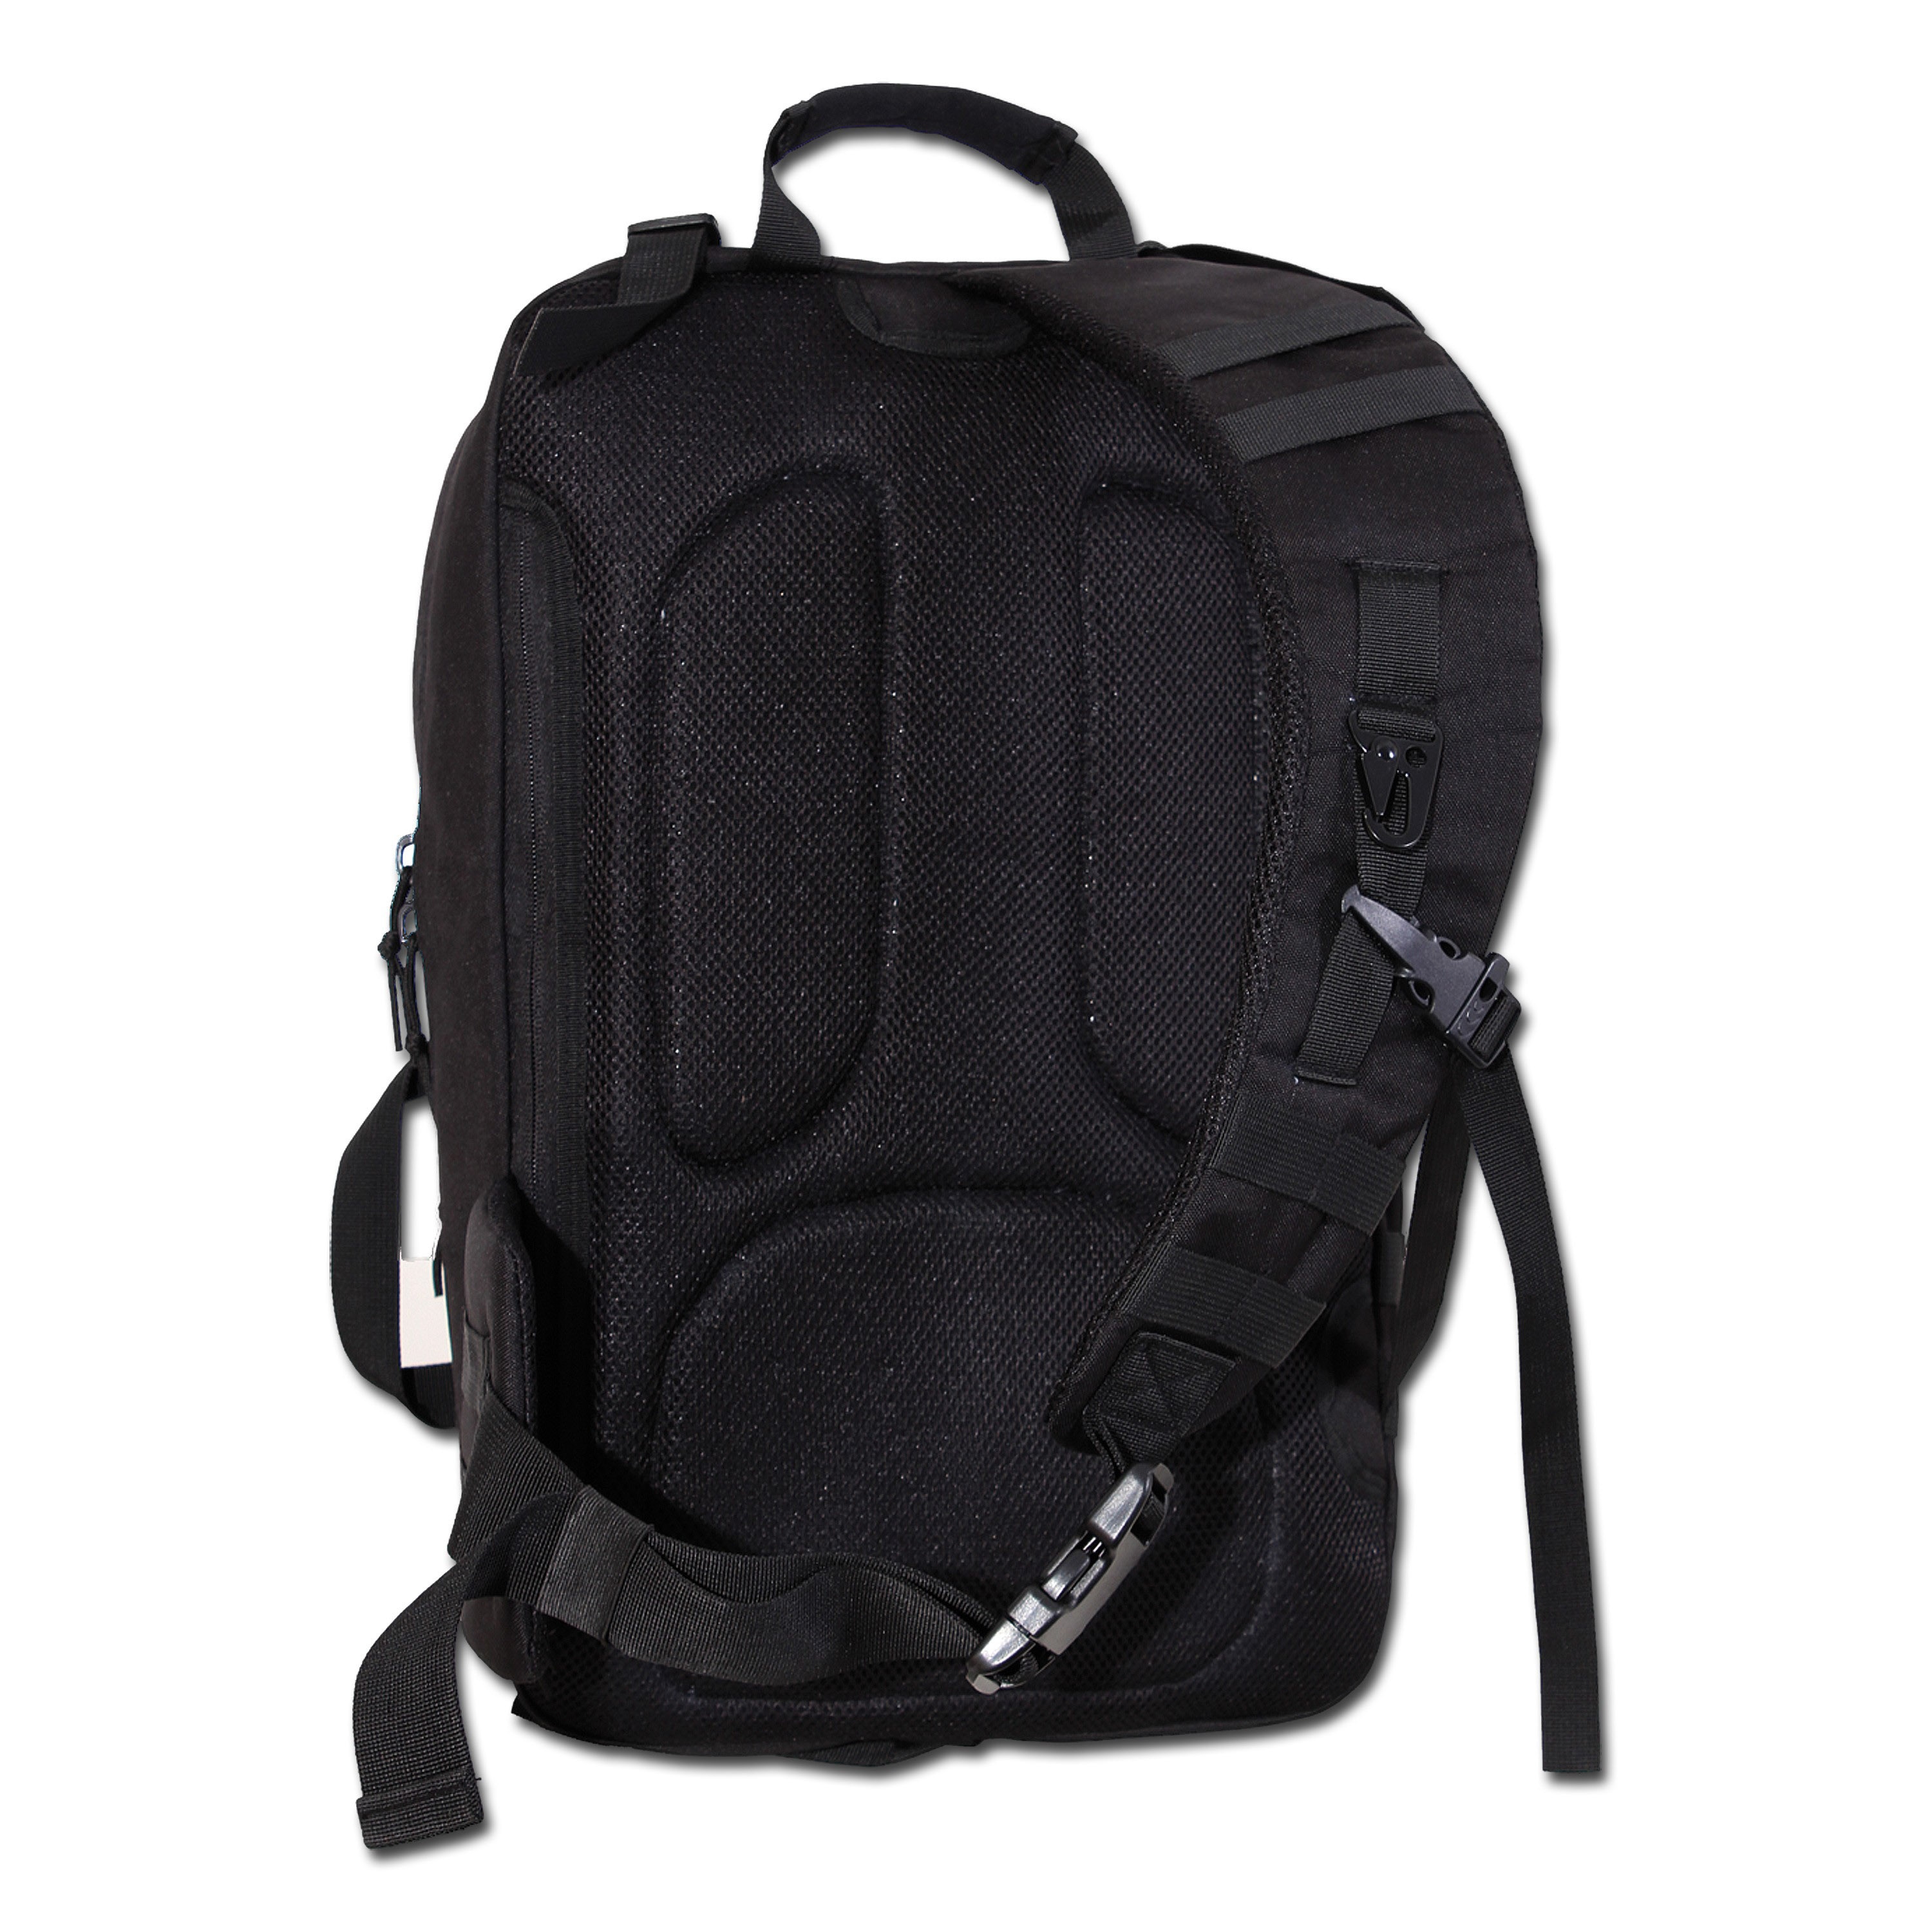 Backpack Rothco Tacti Sling black | Backpack Rothco Tacti Sling black ...